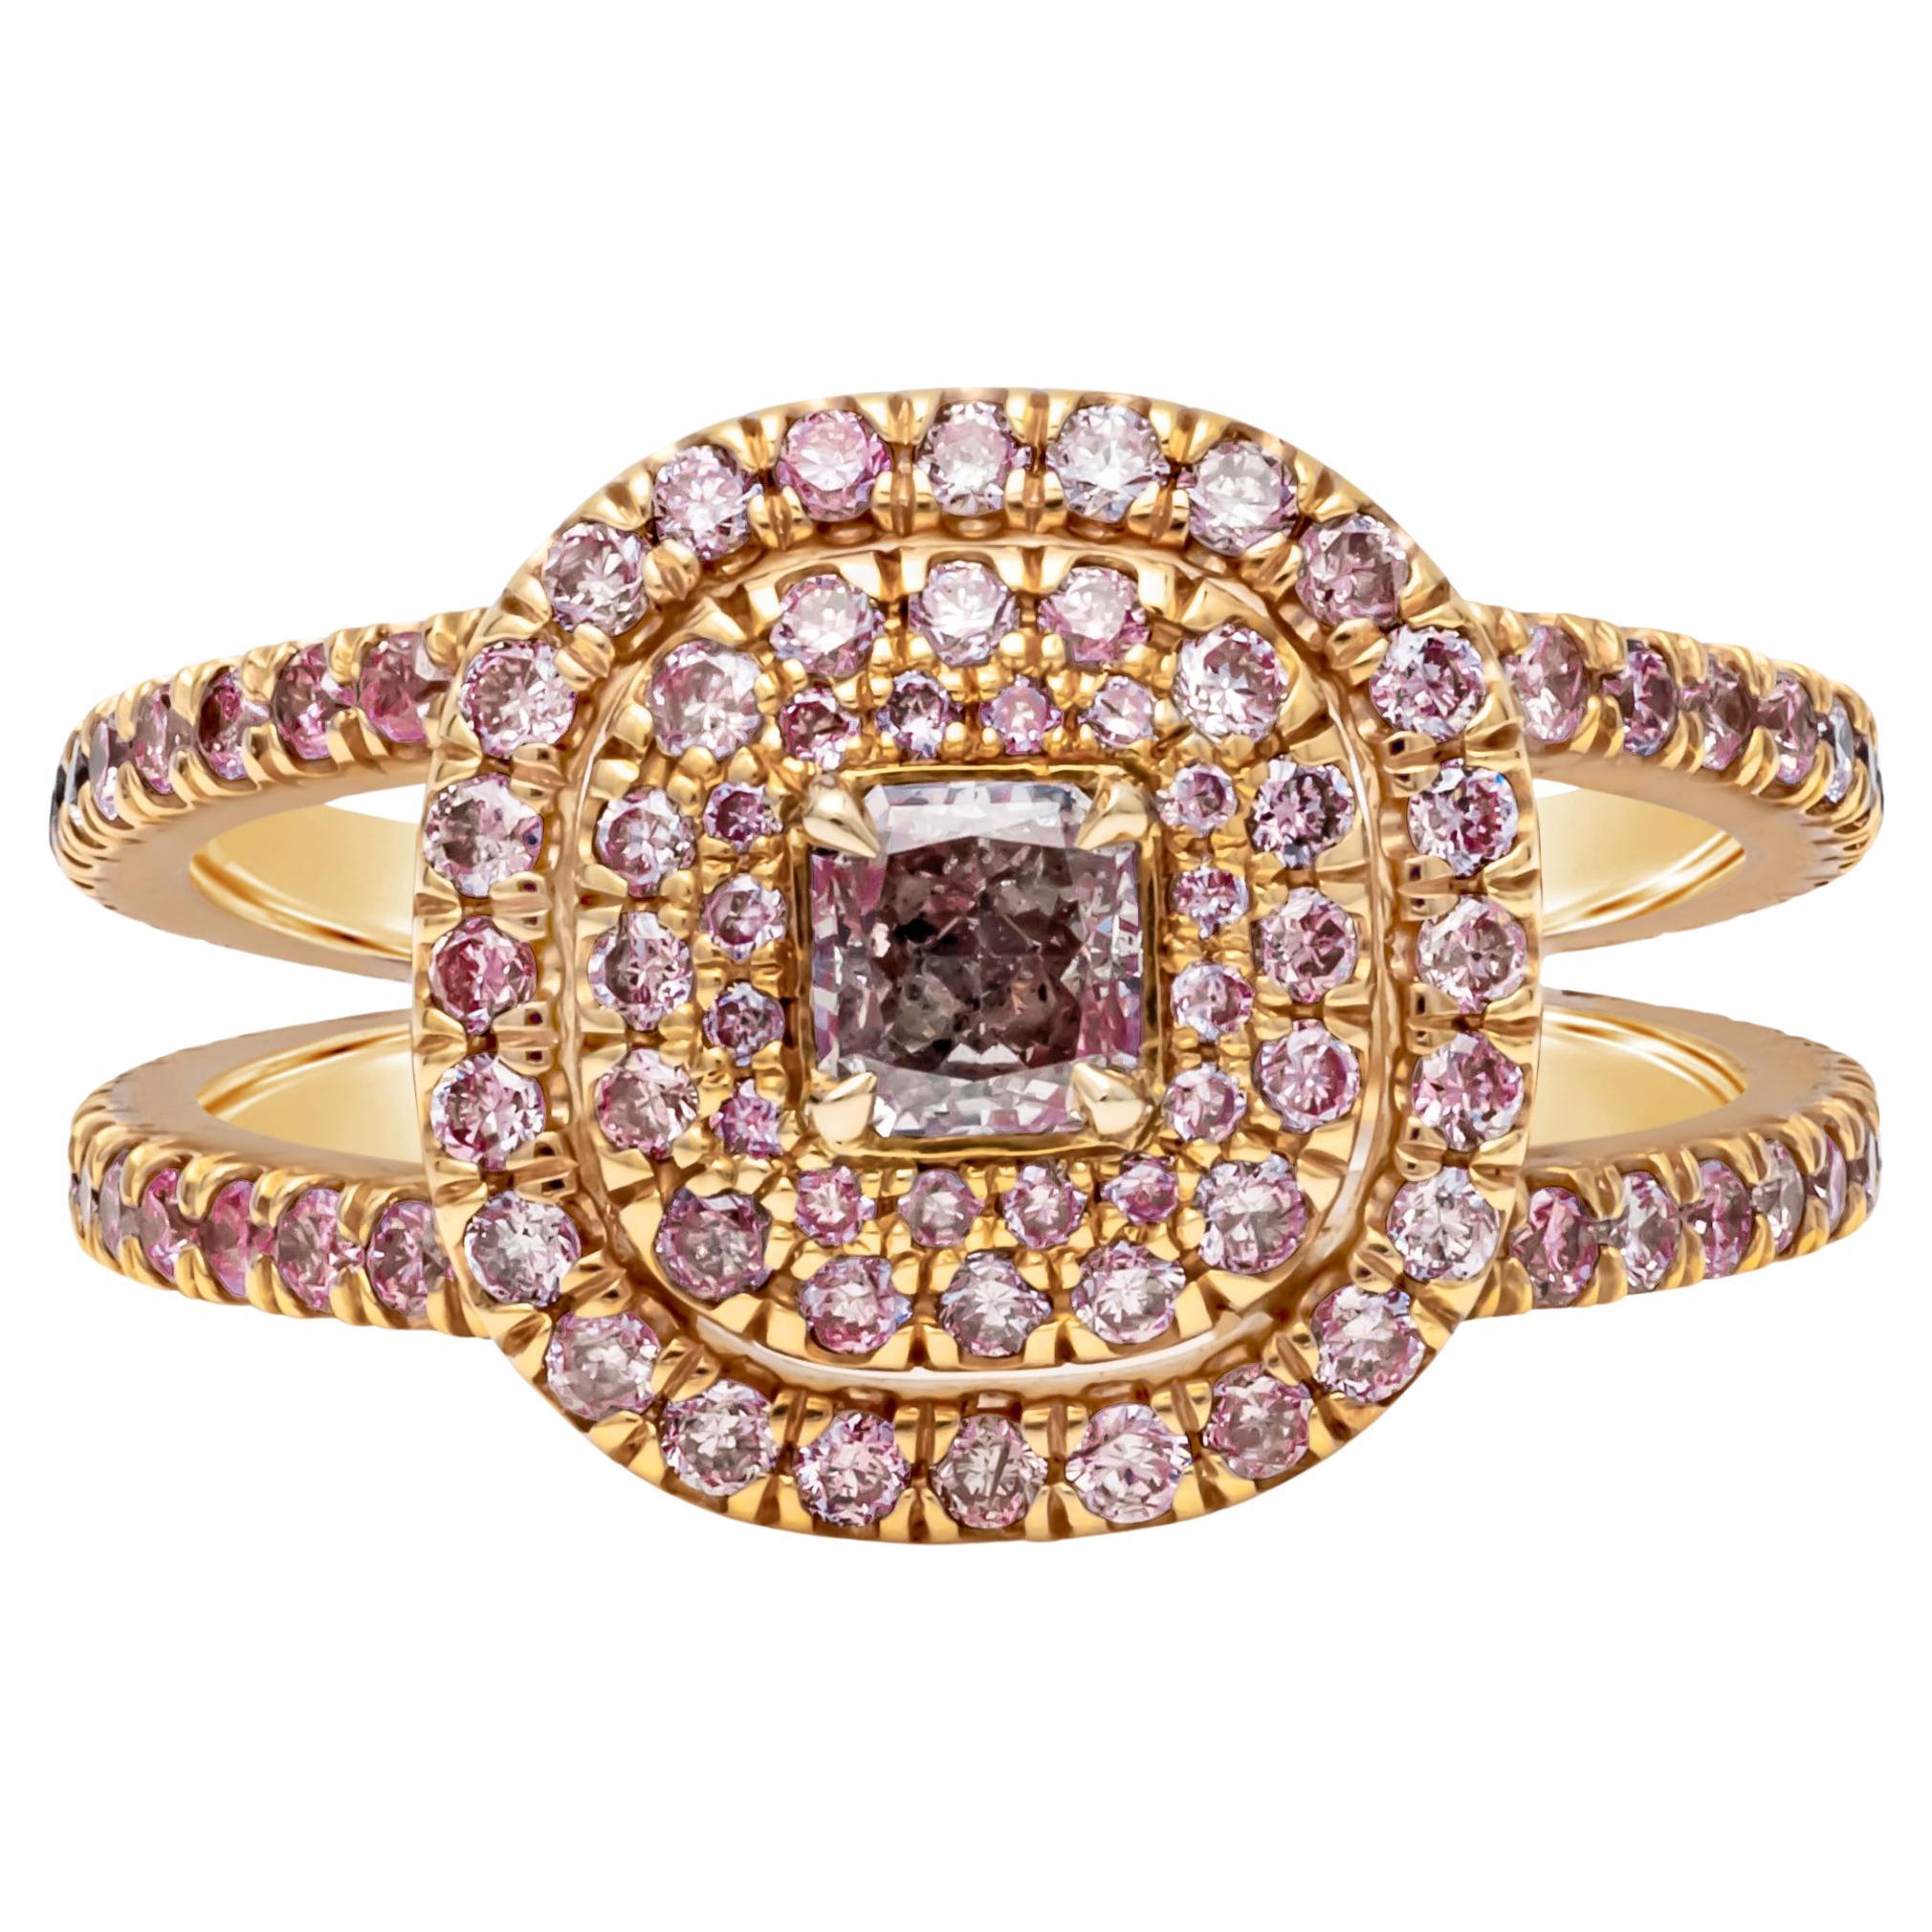 GIA zertifiziert 0,31 Karat Radiant Cut lila Pink Diamond Halo Verlobungsring